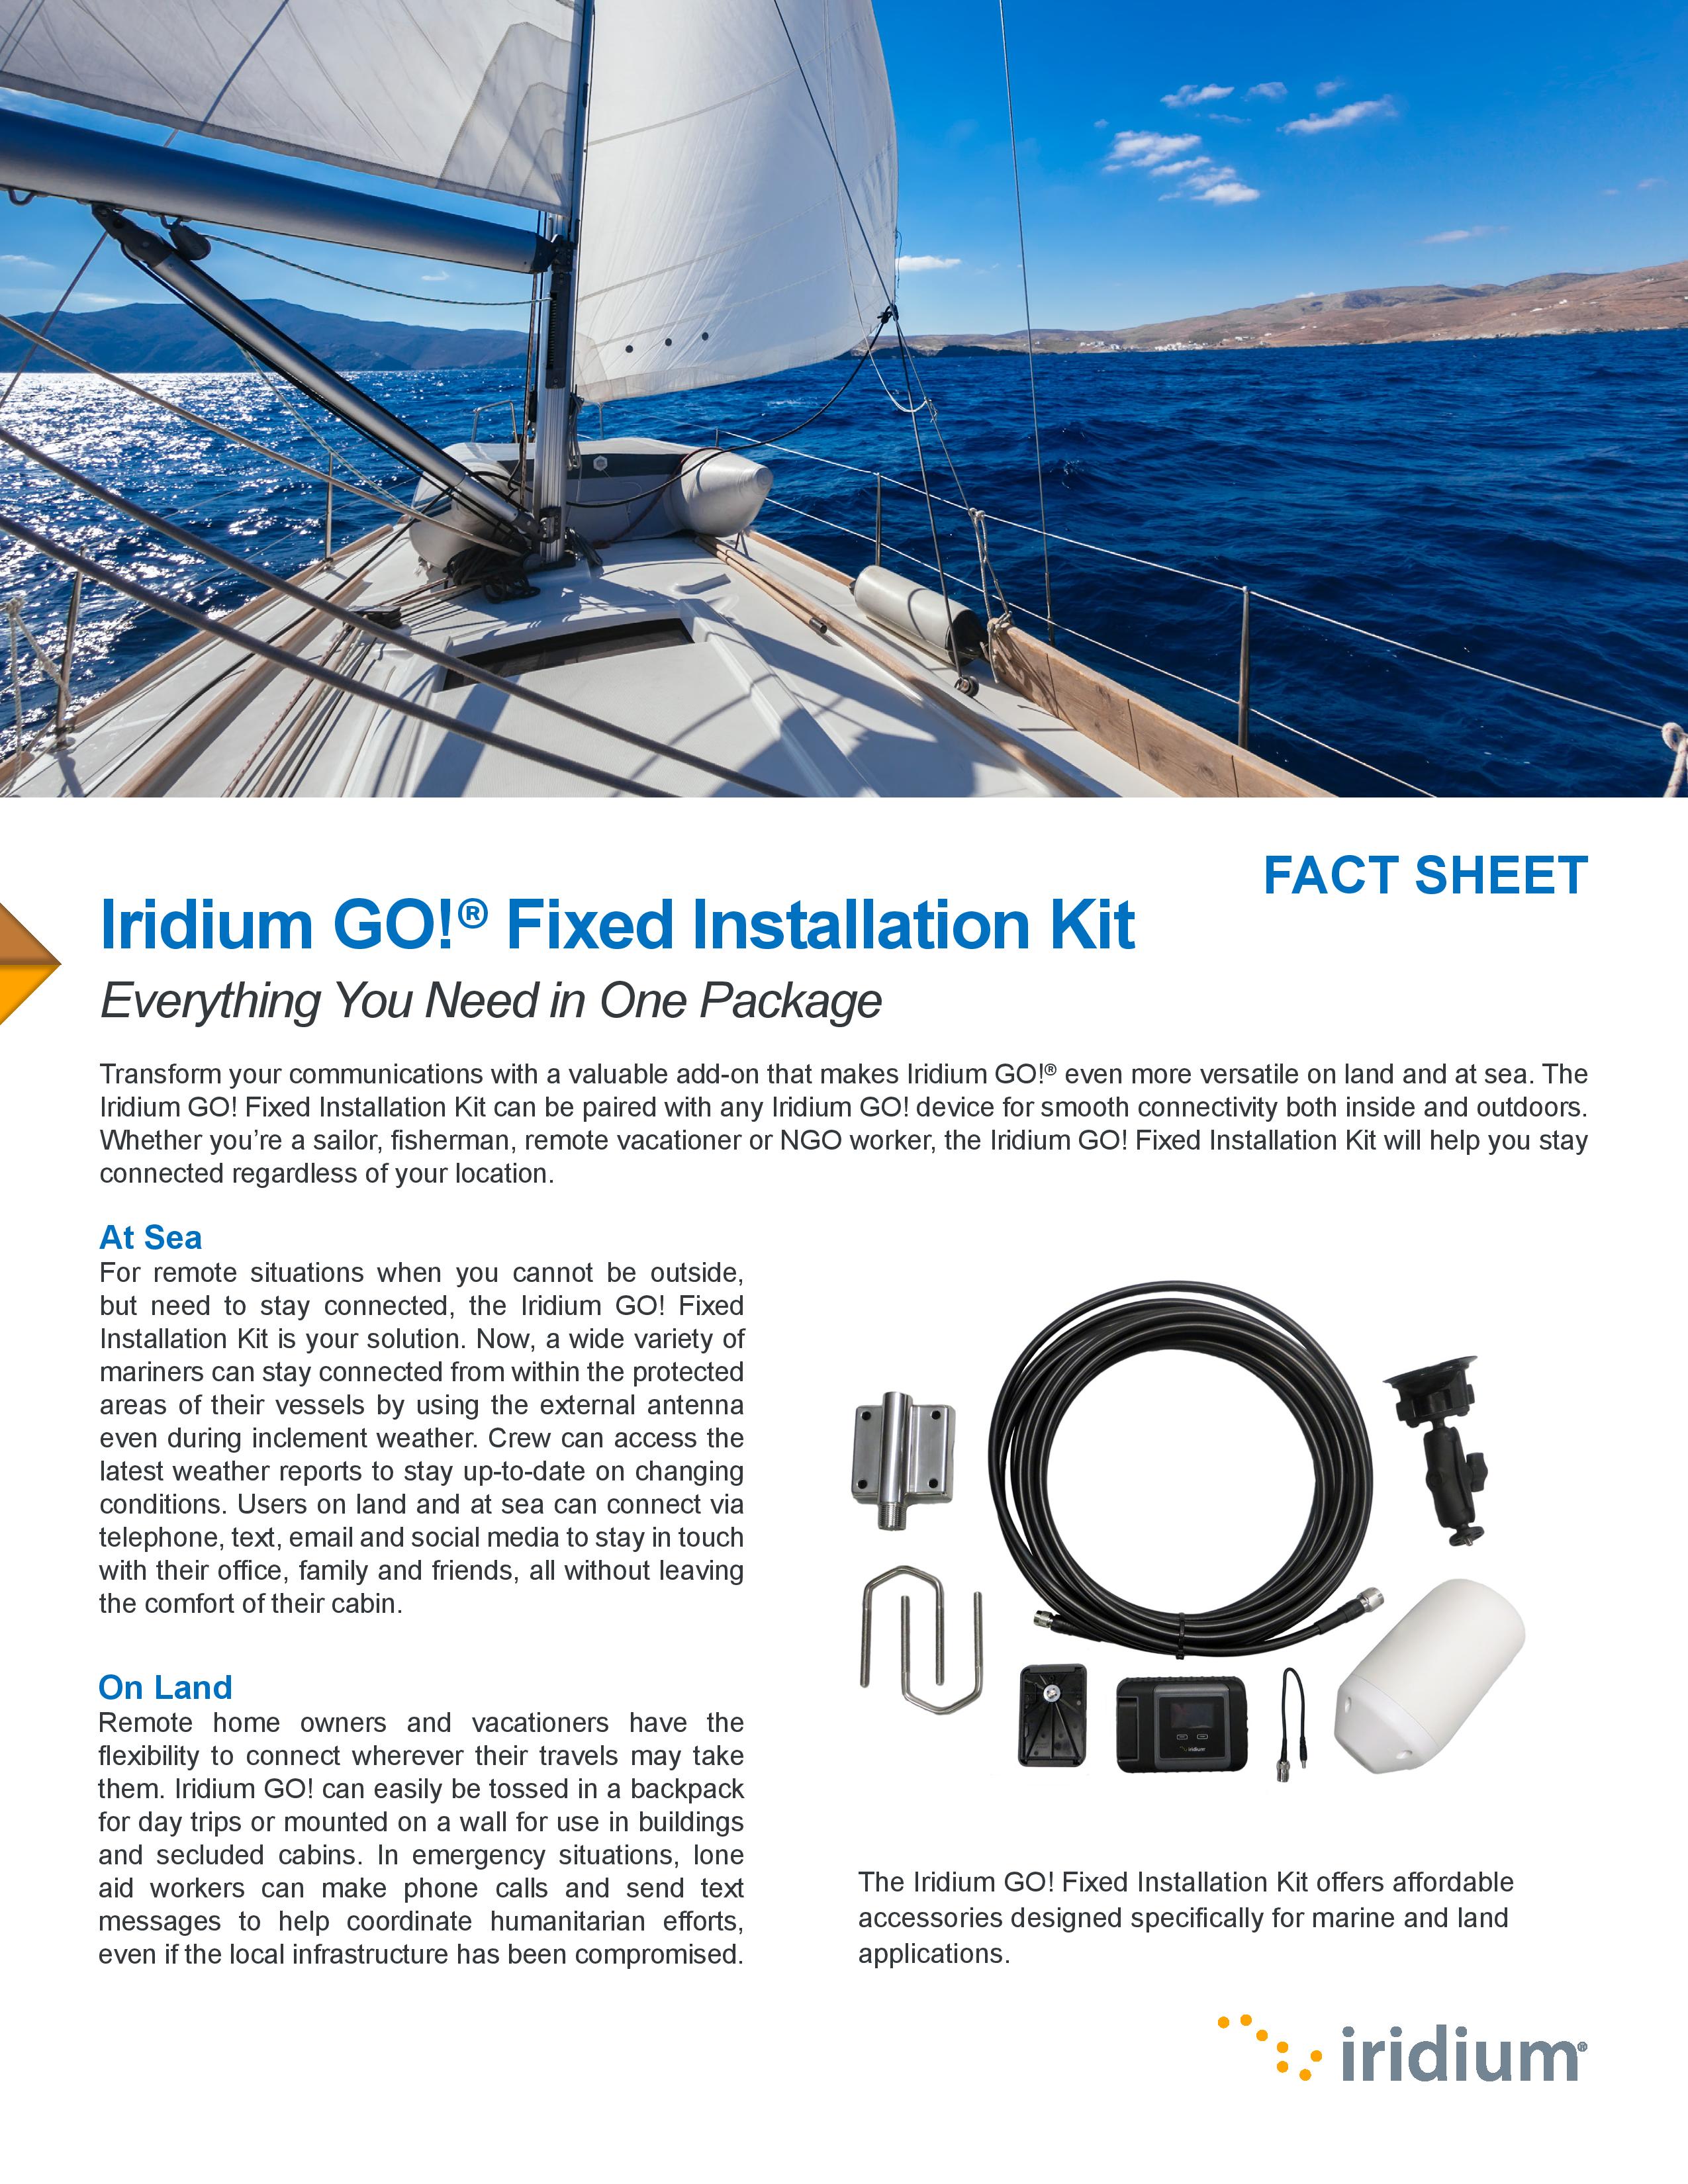 FS_Iridium_GO__Fixed_Installation_Kit_Fact_Sheet_123120_2_-page-001.jpg